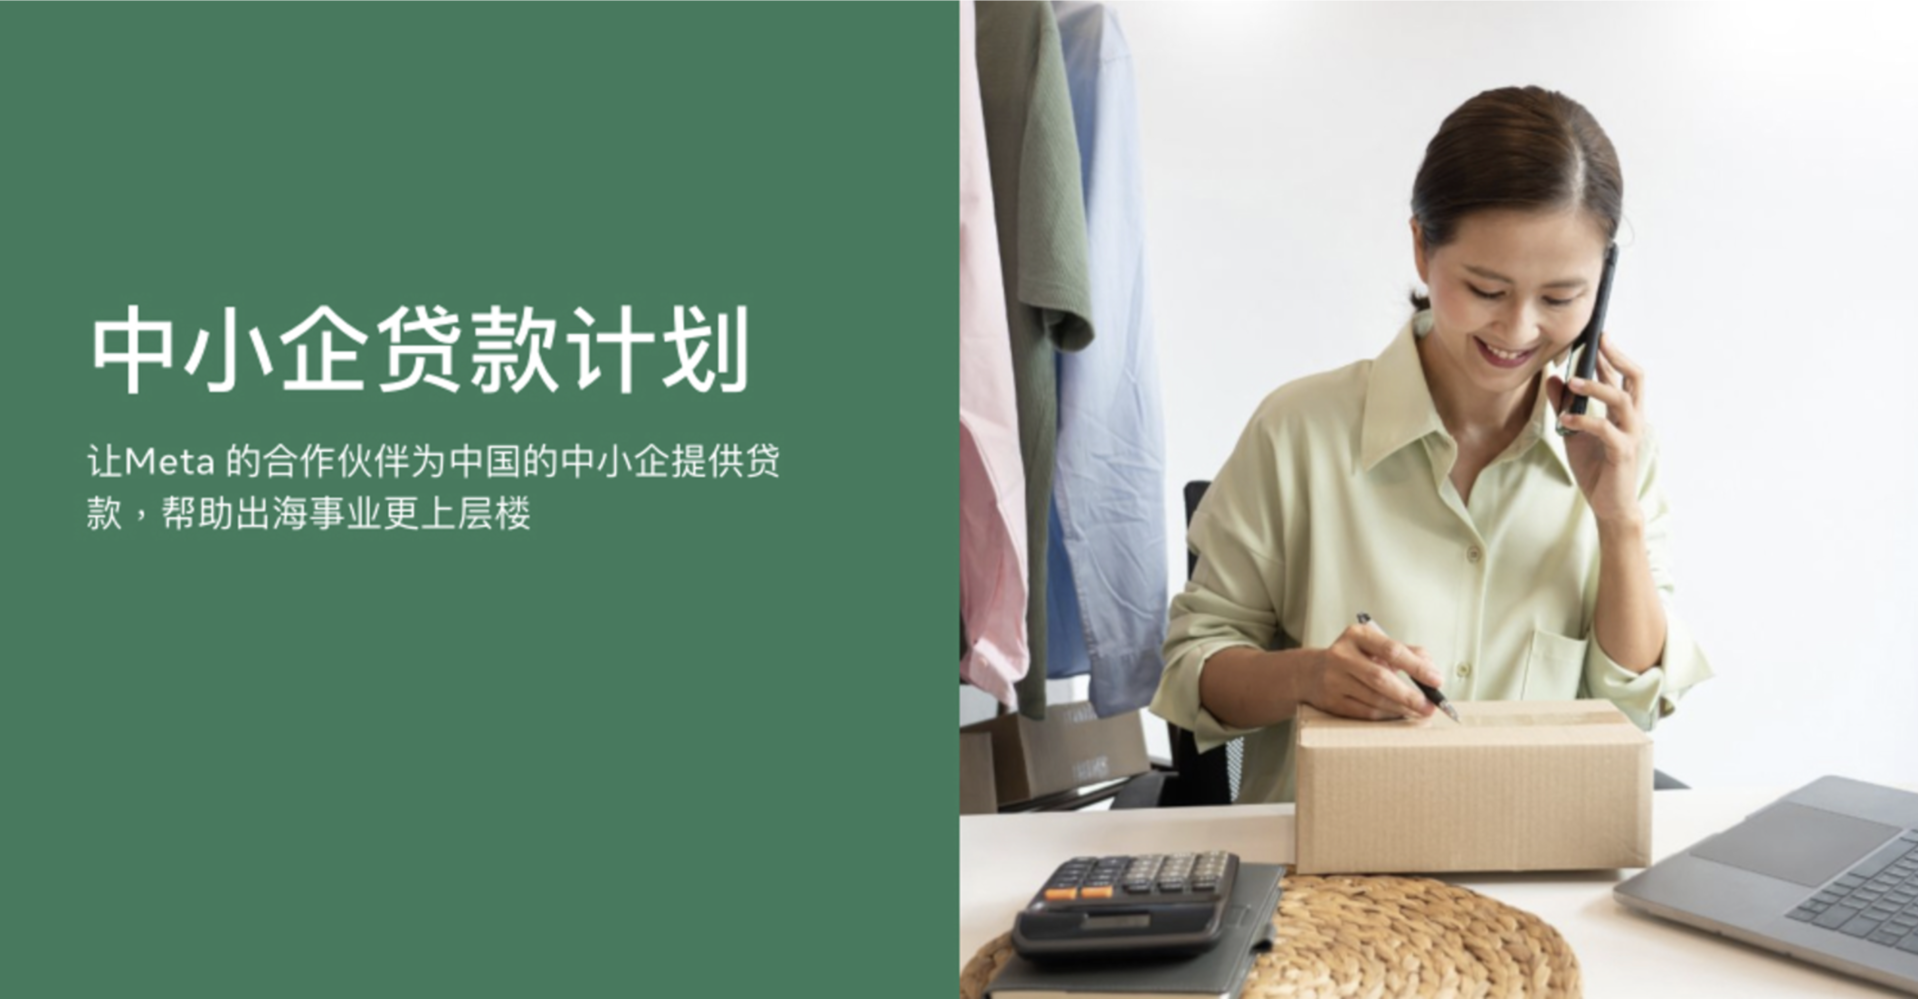 Meta携手Dowsure豆沙包在中国推出面向中小企业的商业贷款计划